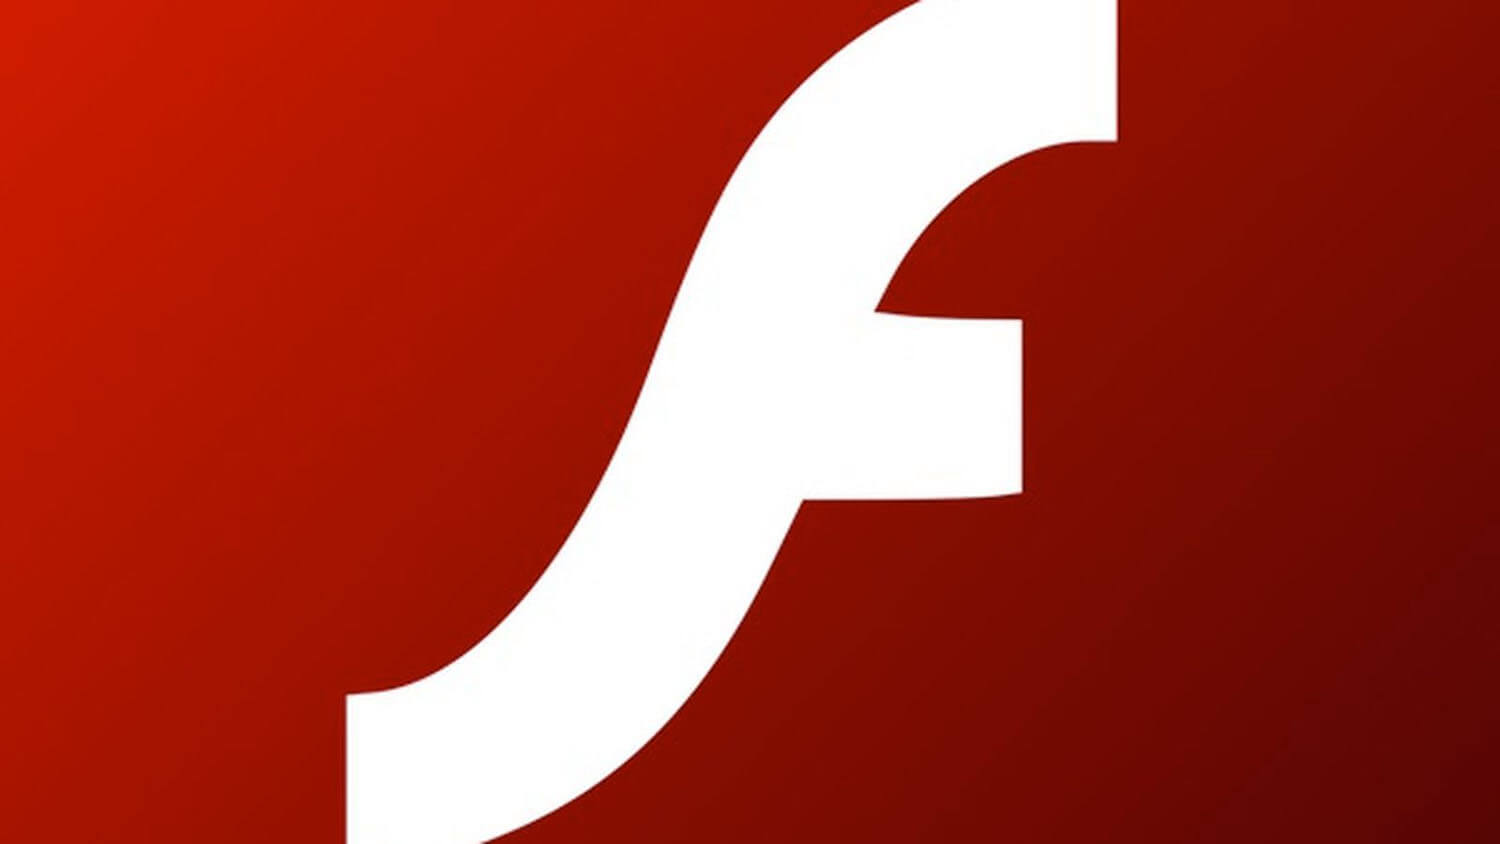 adobe flash player for chrome windows 10 64 bit free download